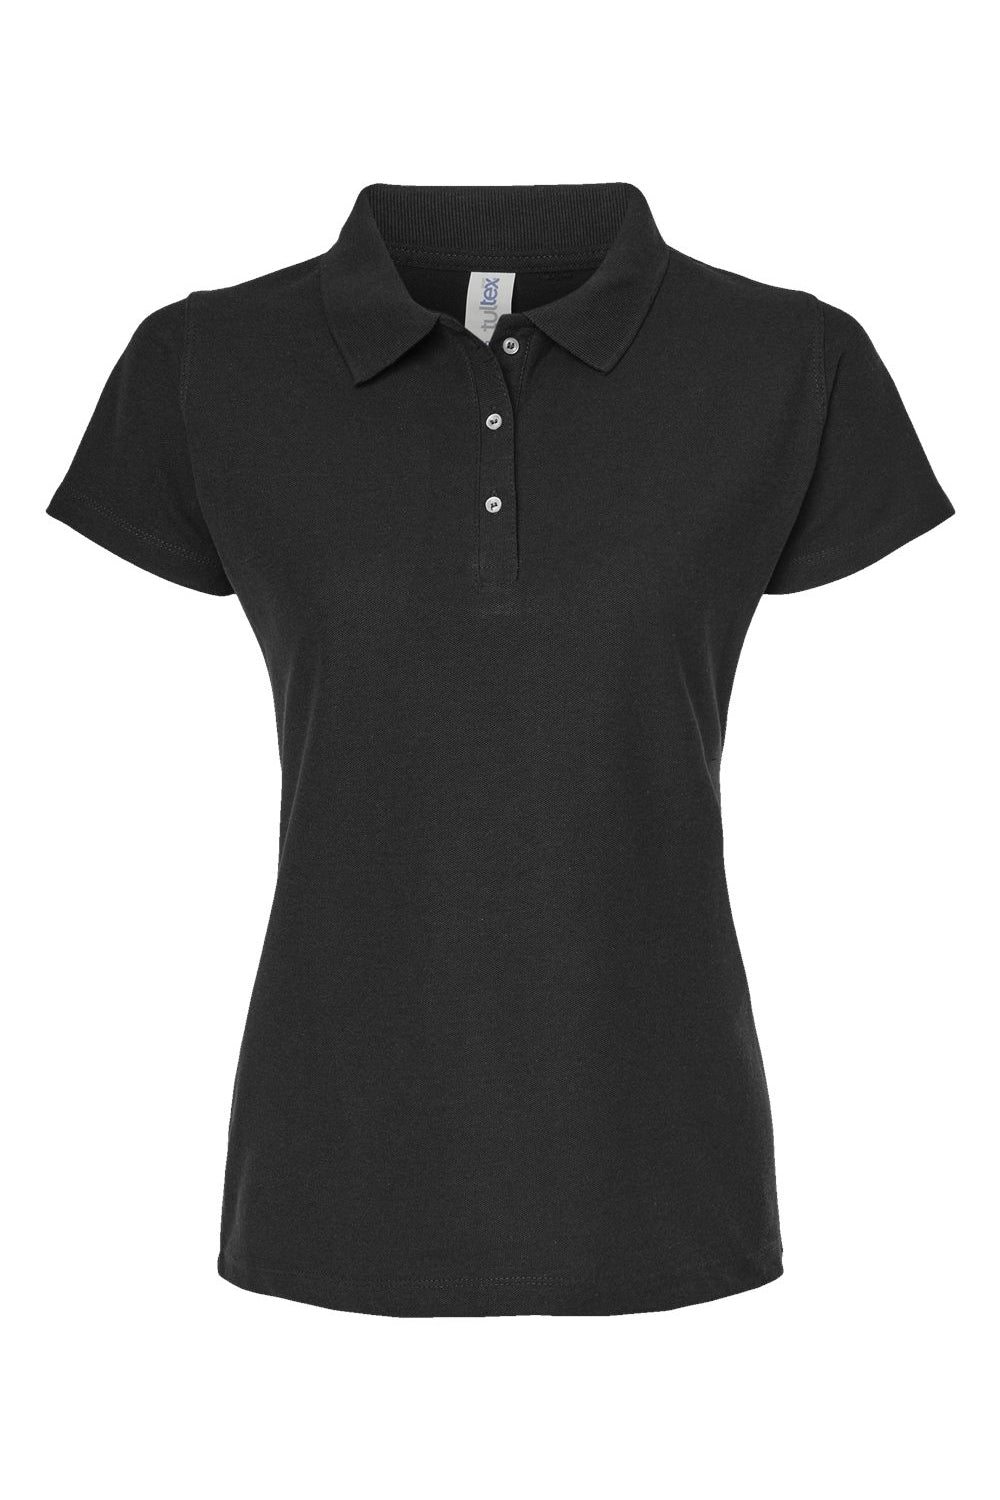 Tultex 401 Womens Sport Shirt Sleeve Polo Shirt Black Flat Front